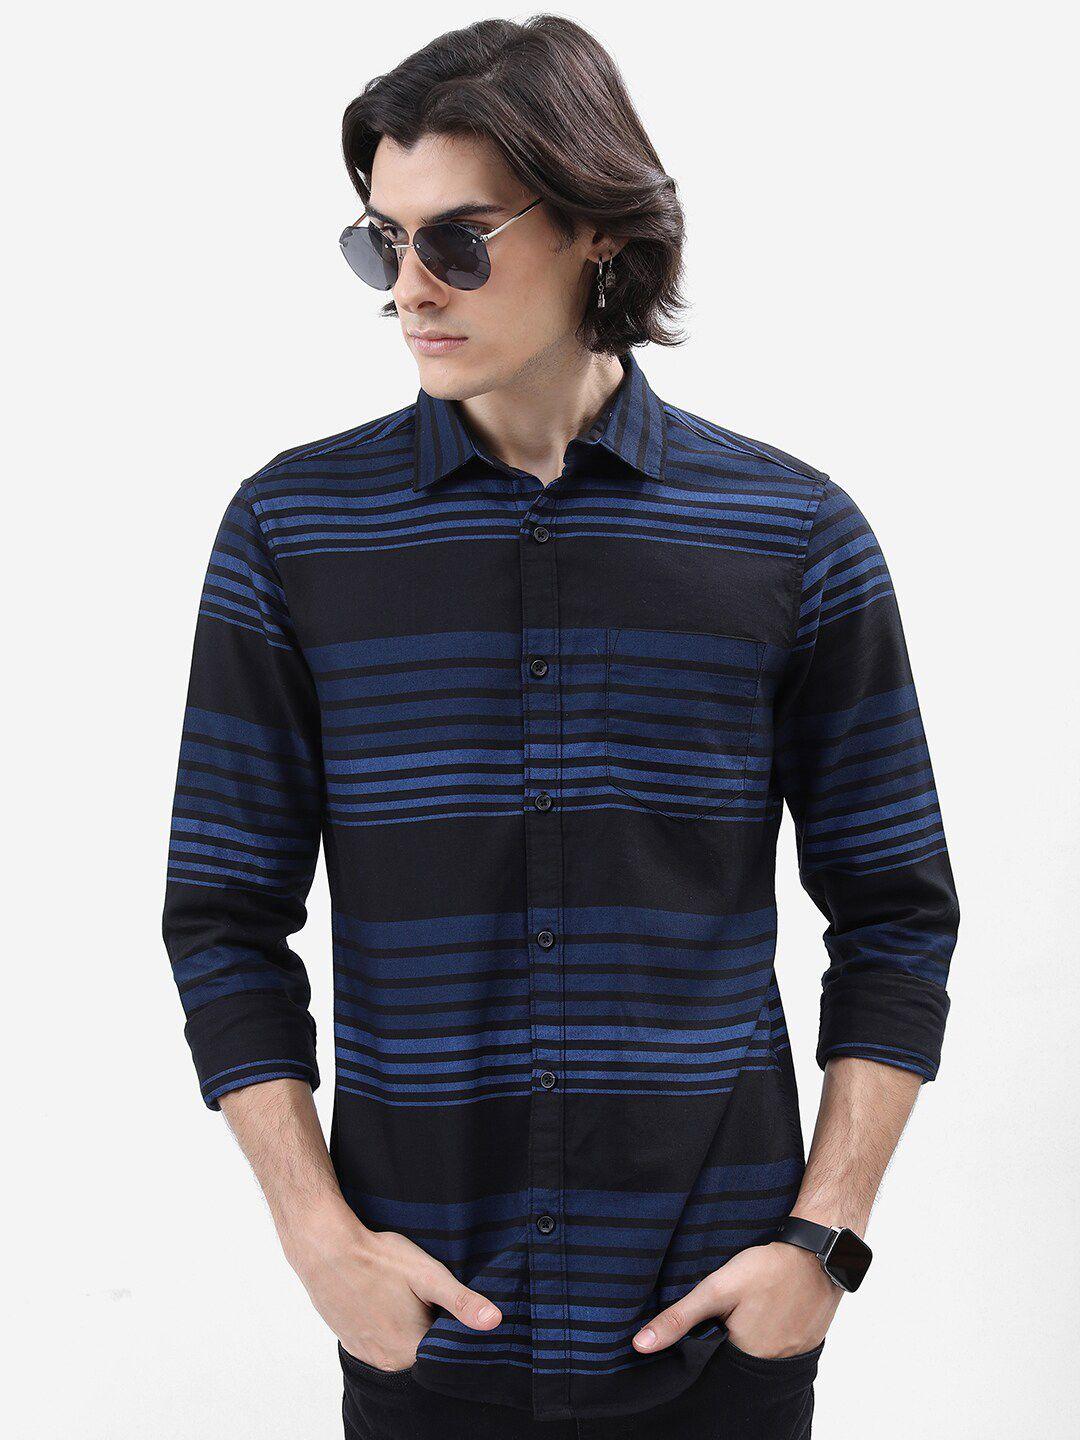 highlander-navy-blue-horizontal-striped-slim-fit-spread-collar-casual-shirt